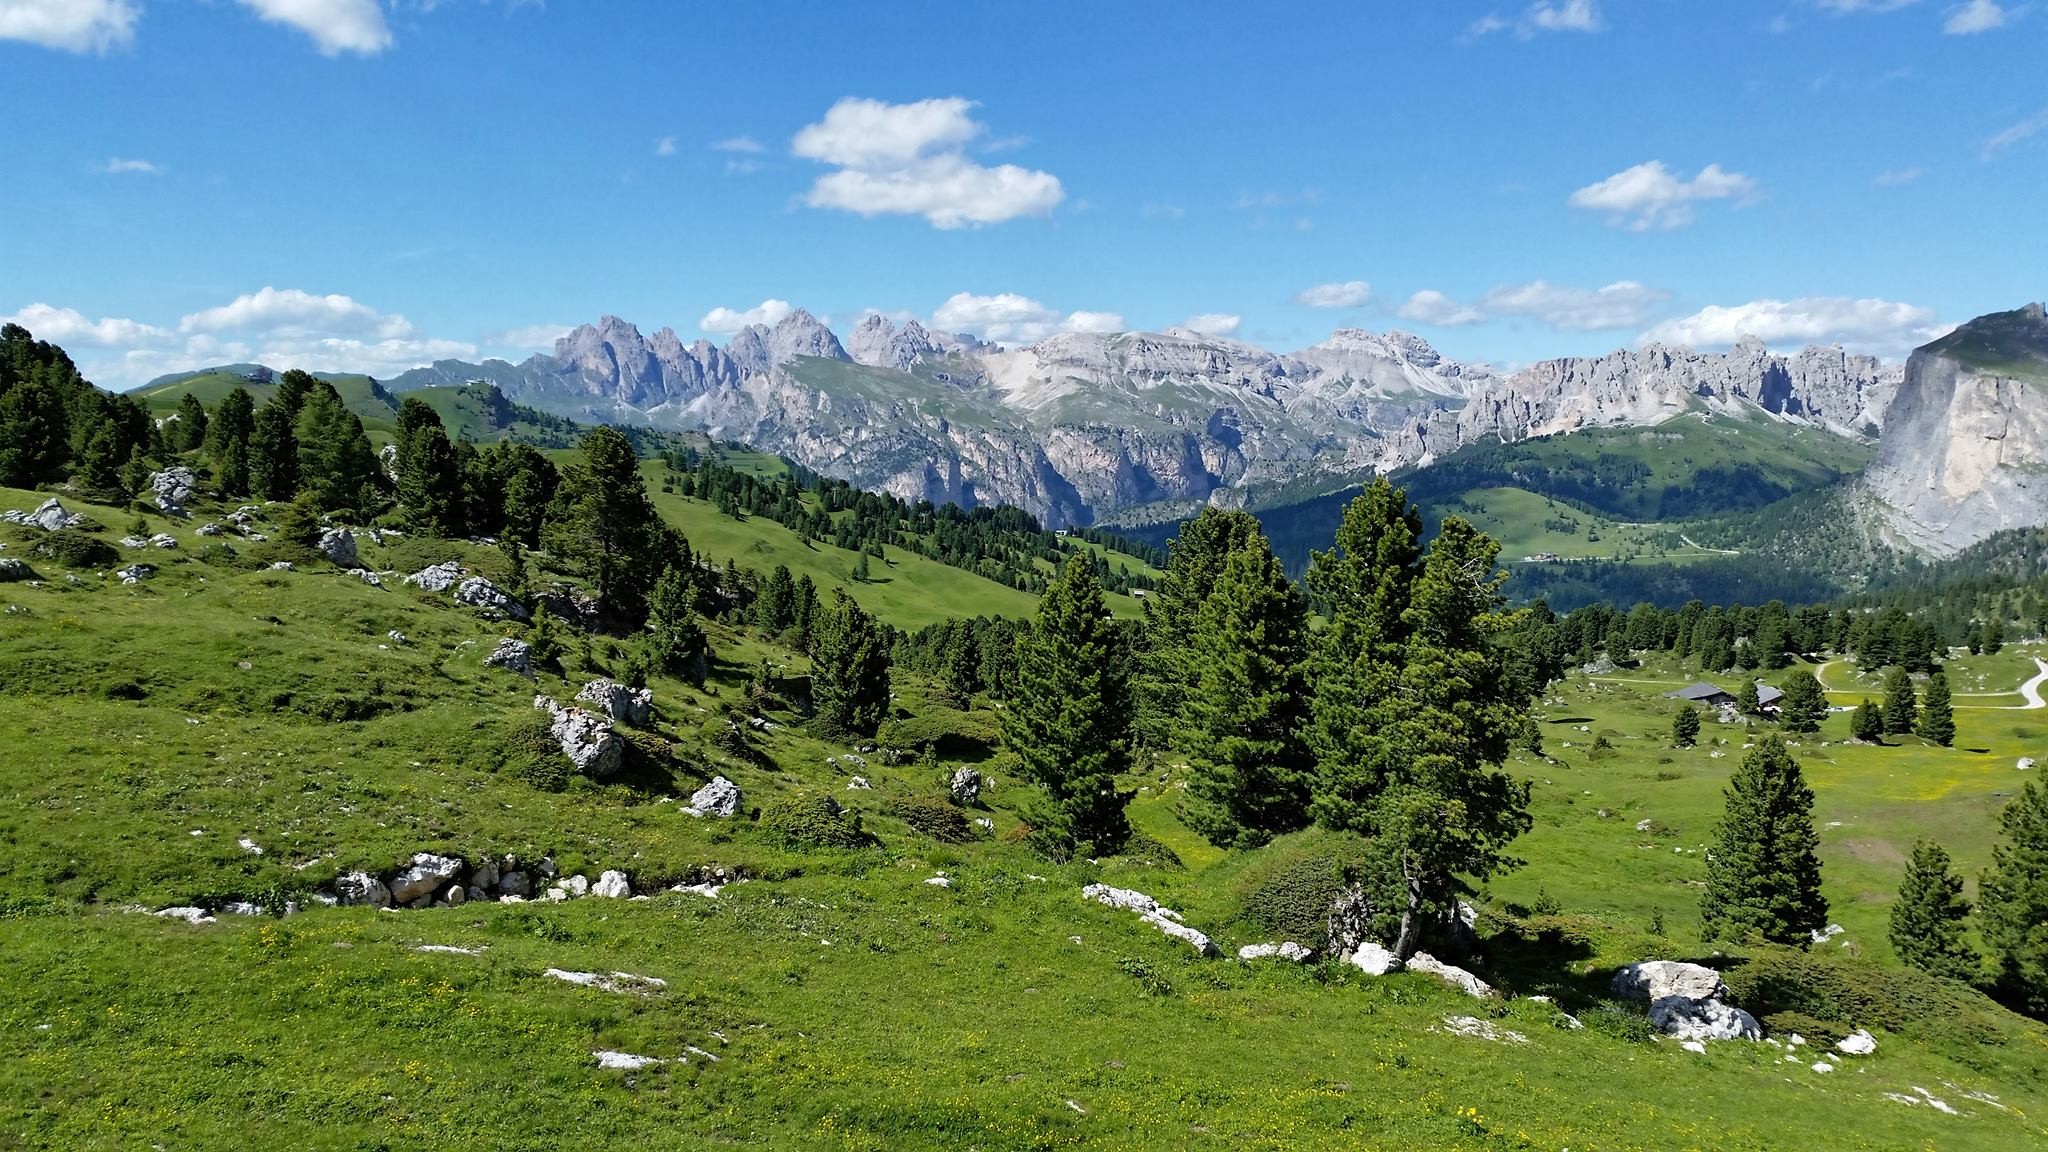 General 2048x1152 Dolomites mountains nature landscape